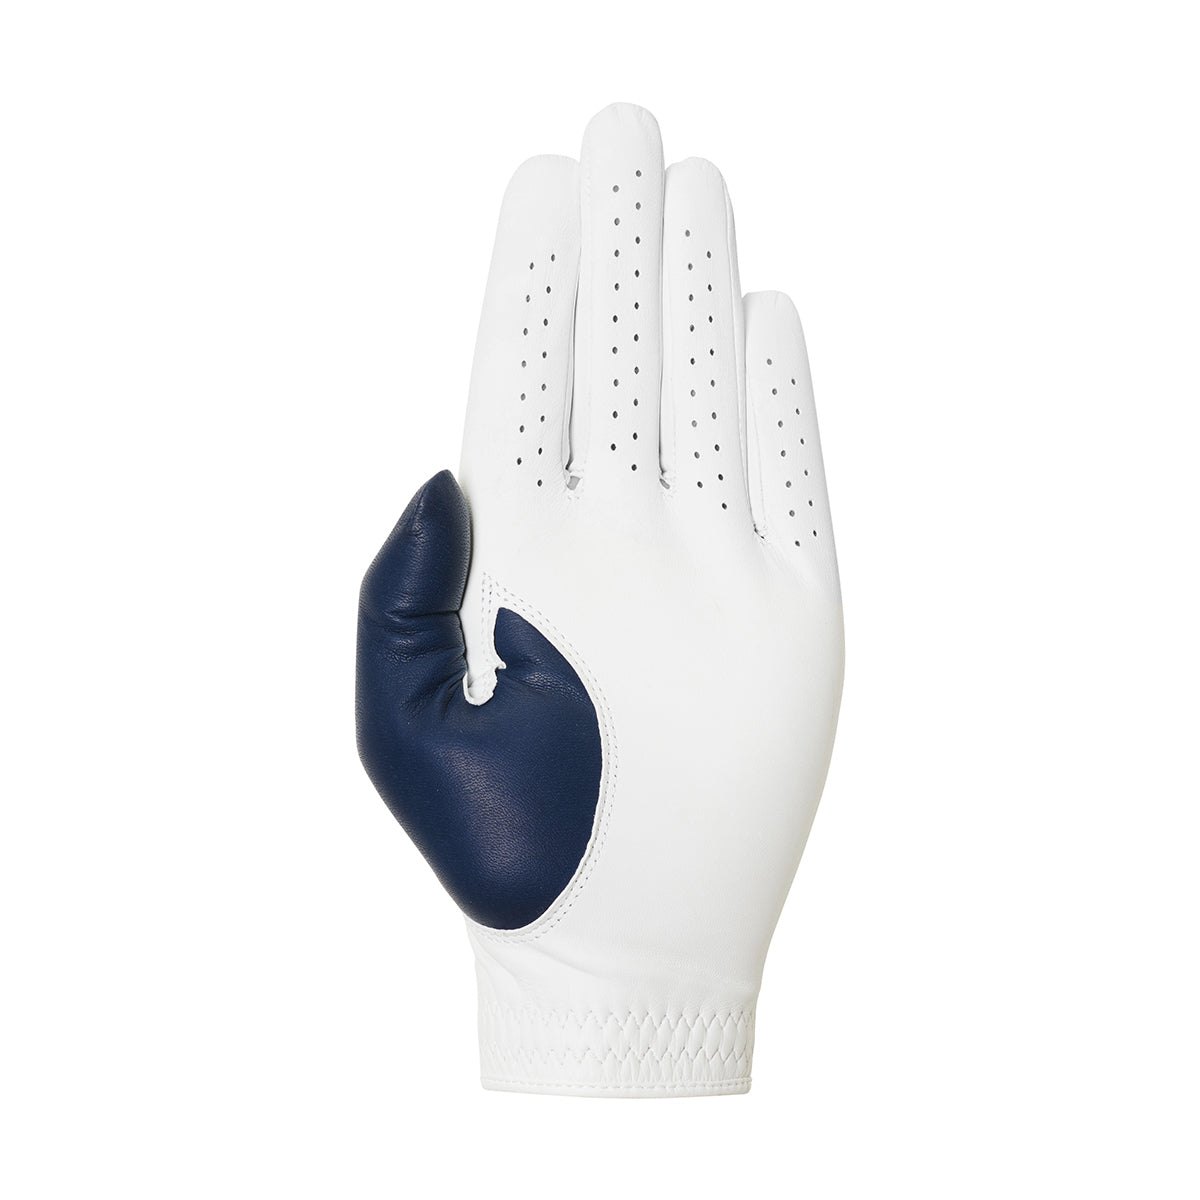 Men's Elite Pro Sentosa White / Navy Golf Glove - Left